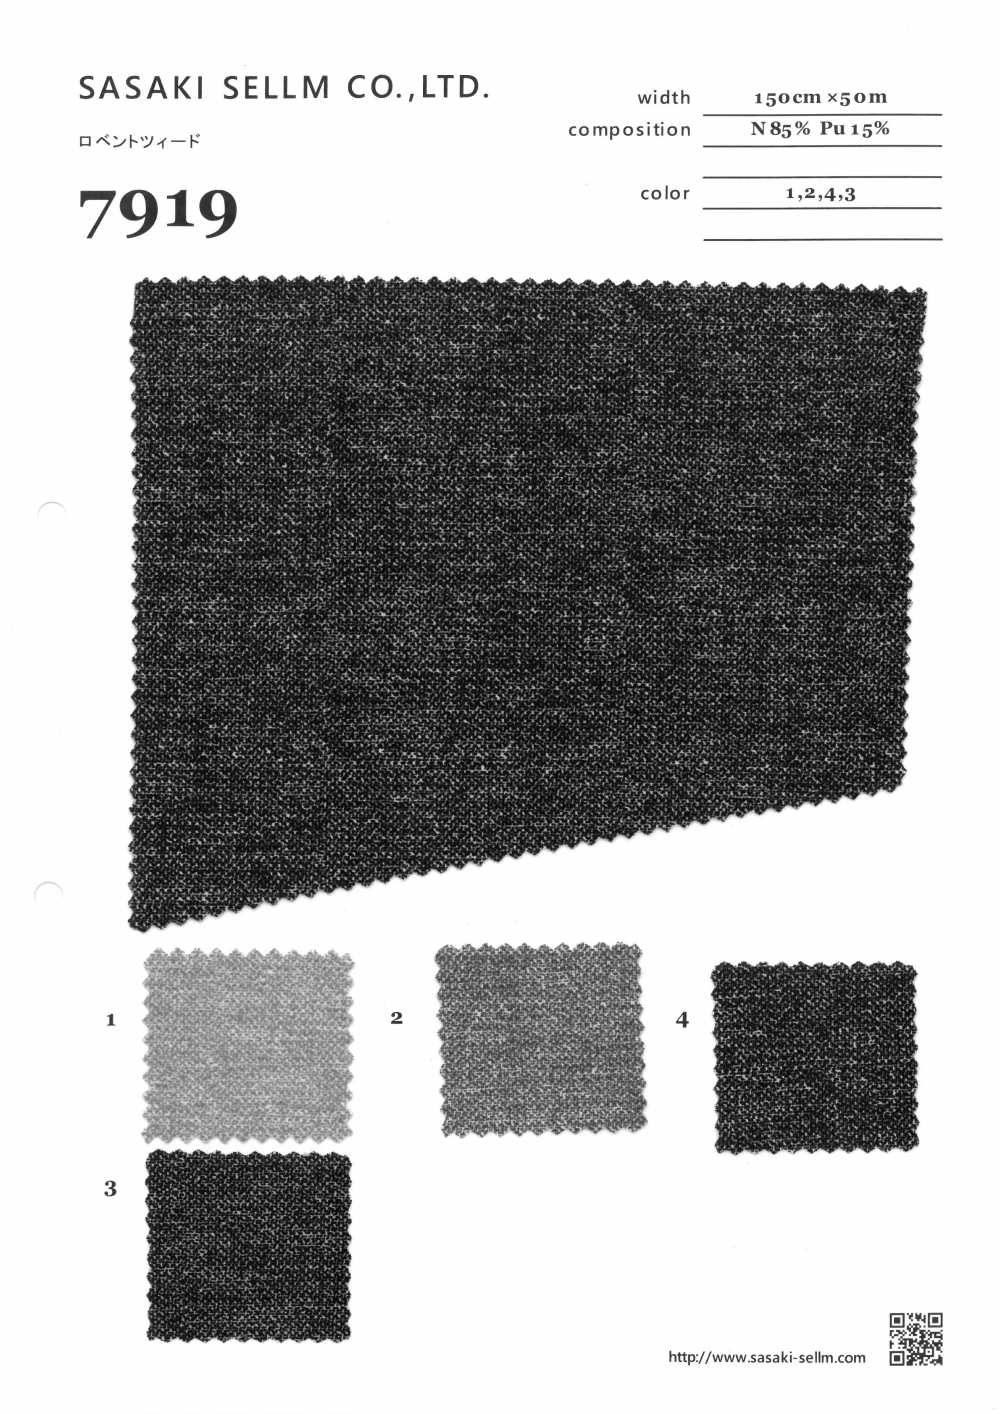 7919 Lovent Tweed[Fabrication De Textile] SASAKISELLM